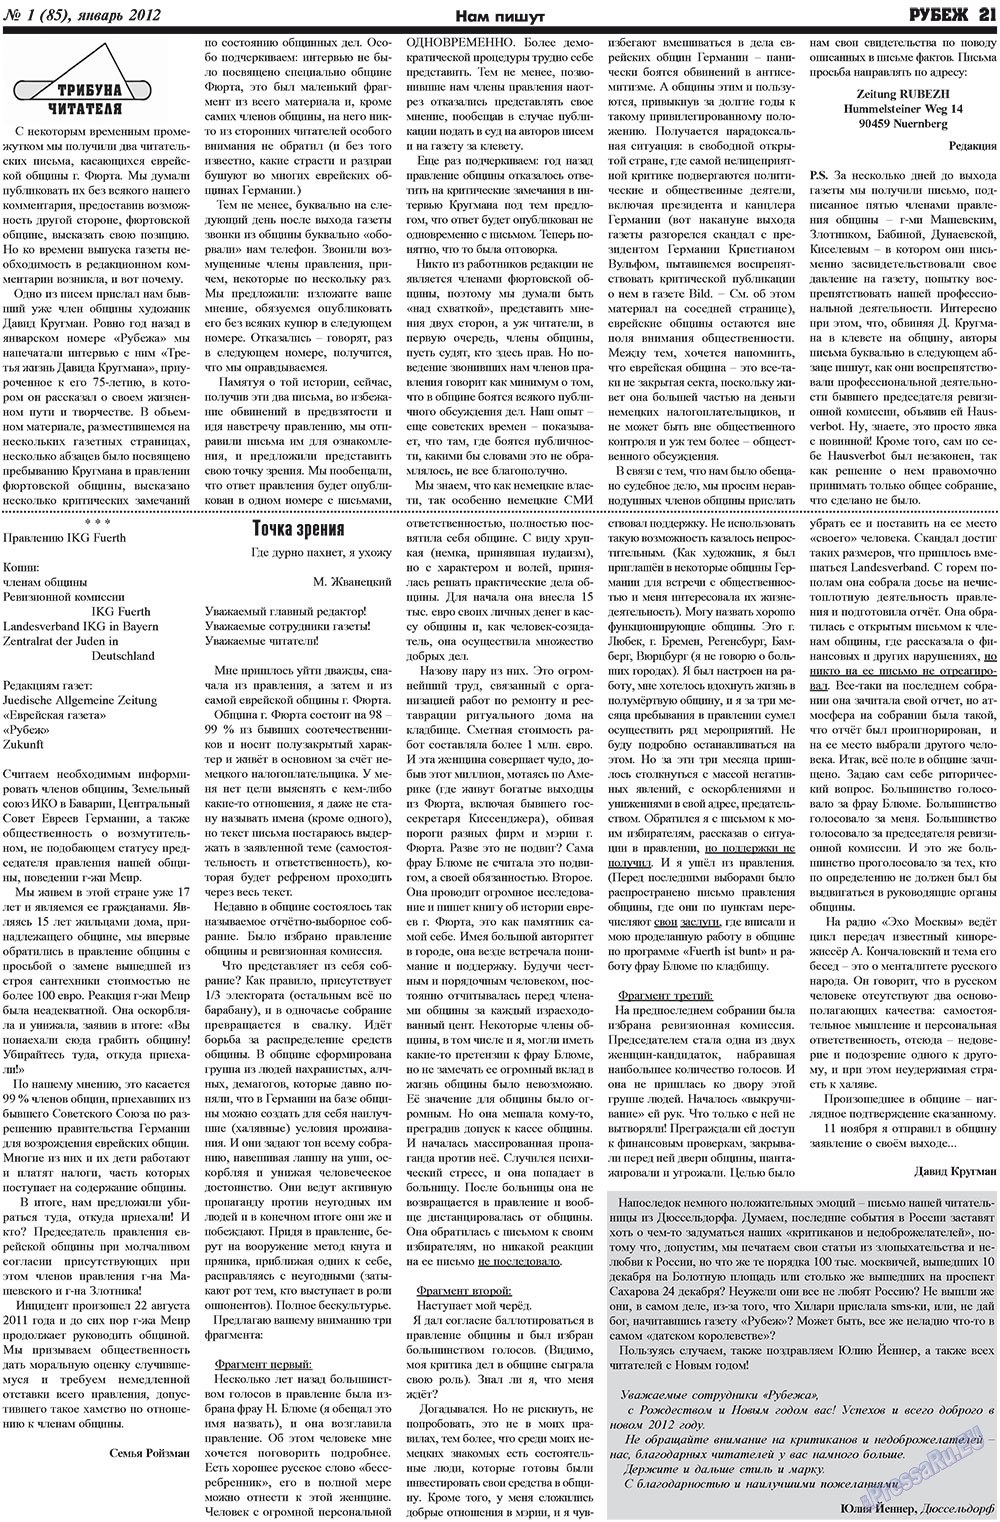 Рубеж, газета. 2012 №1 стр.21